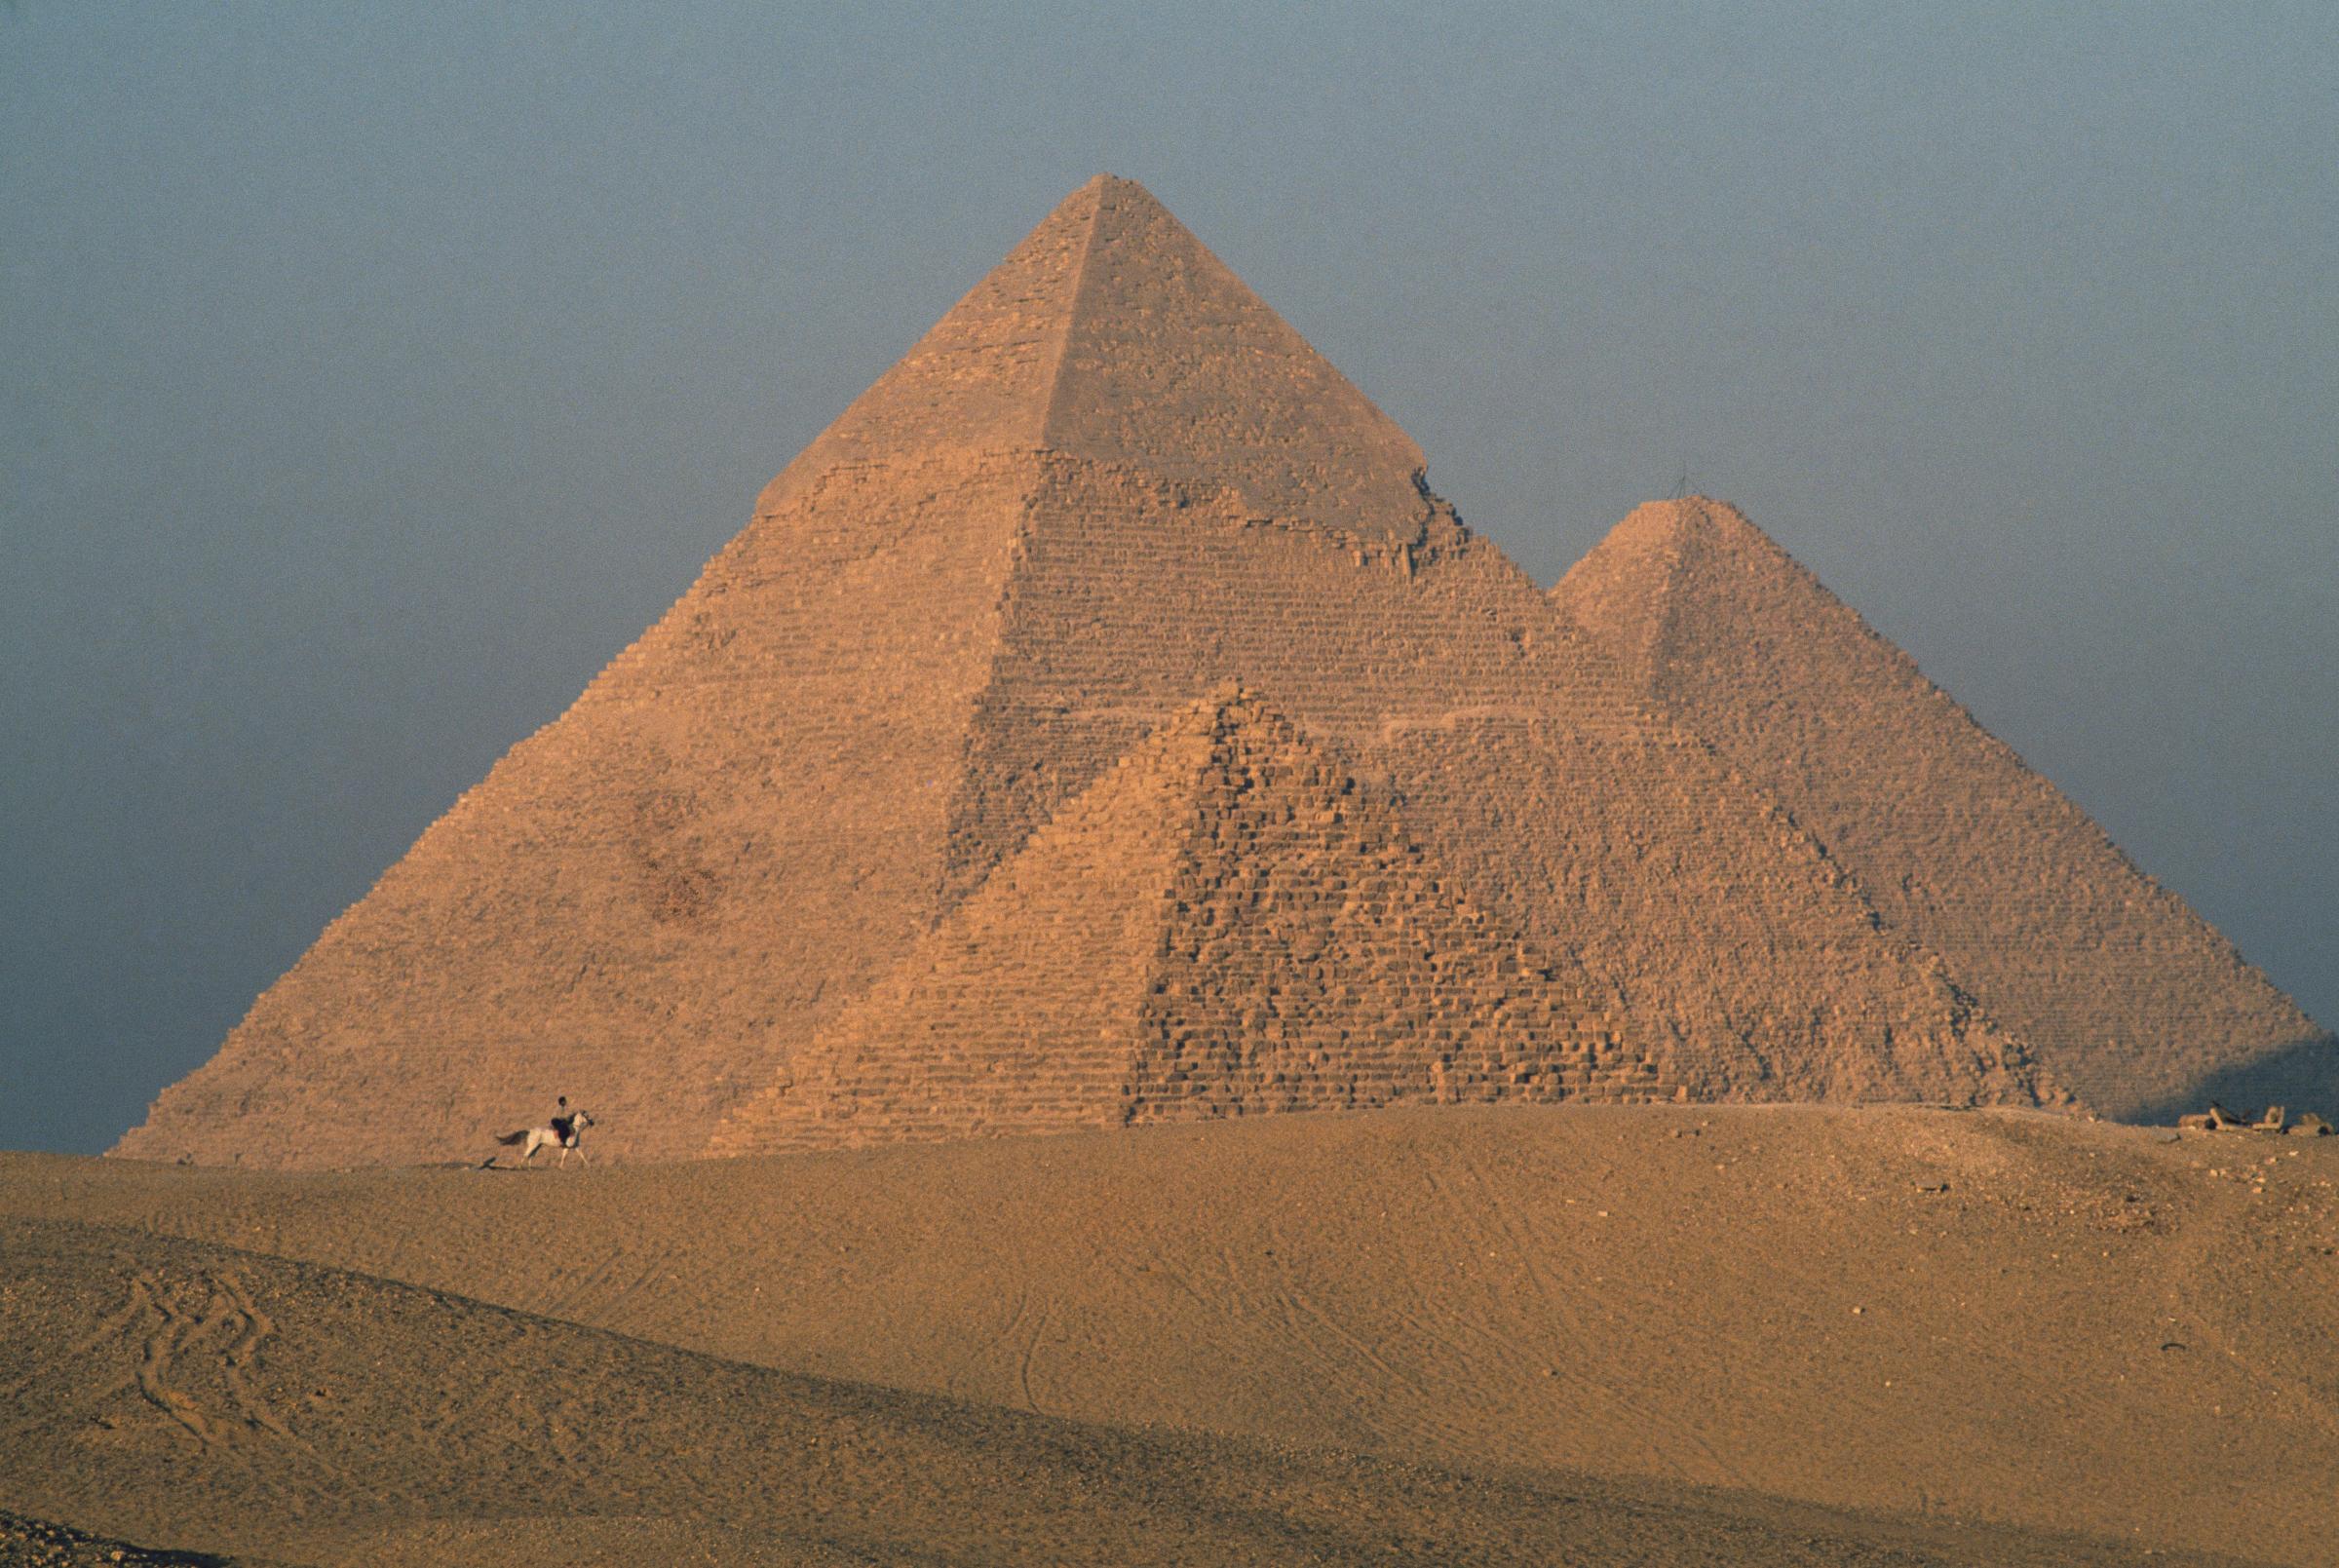 The Pyramids of Menkaure